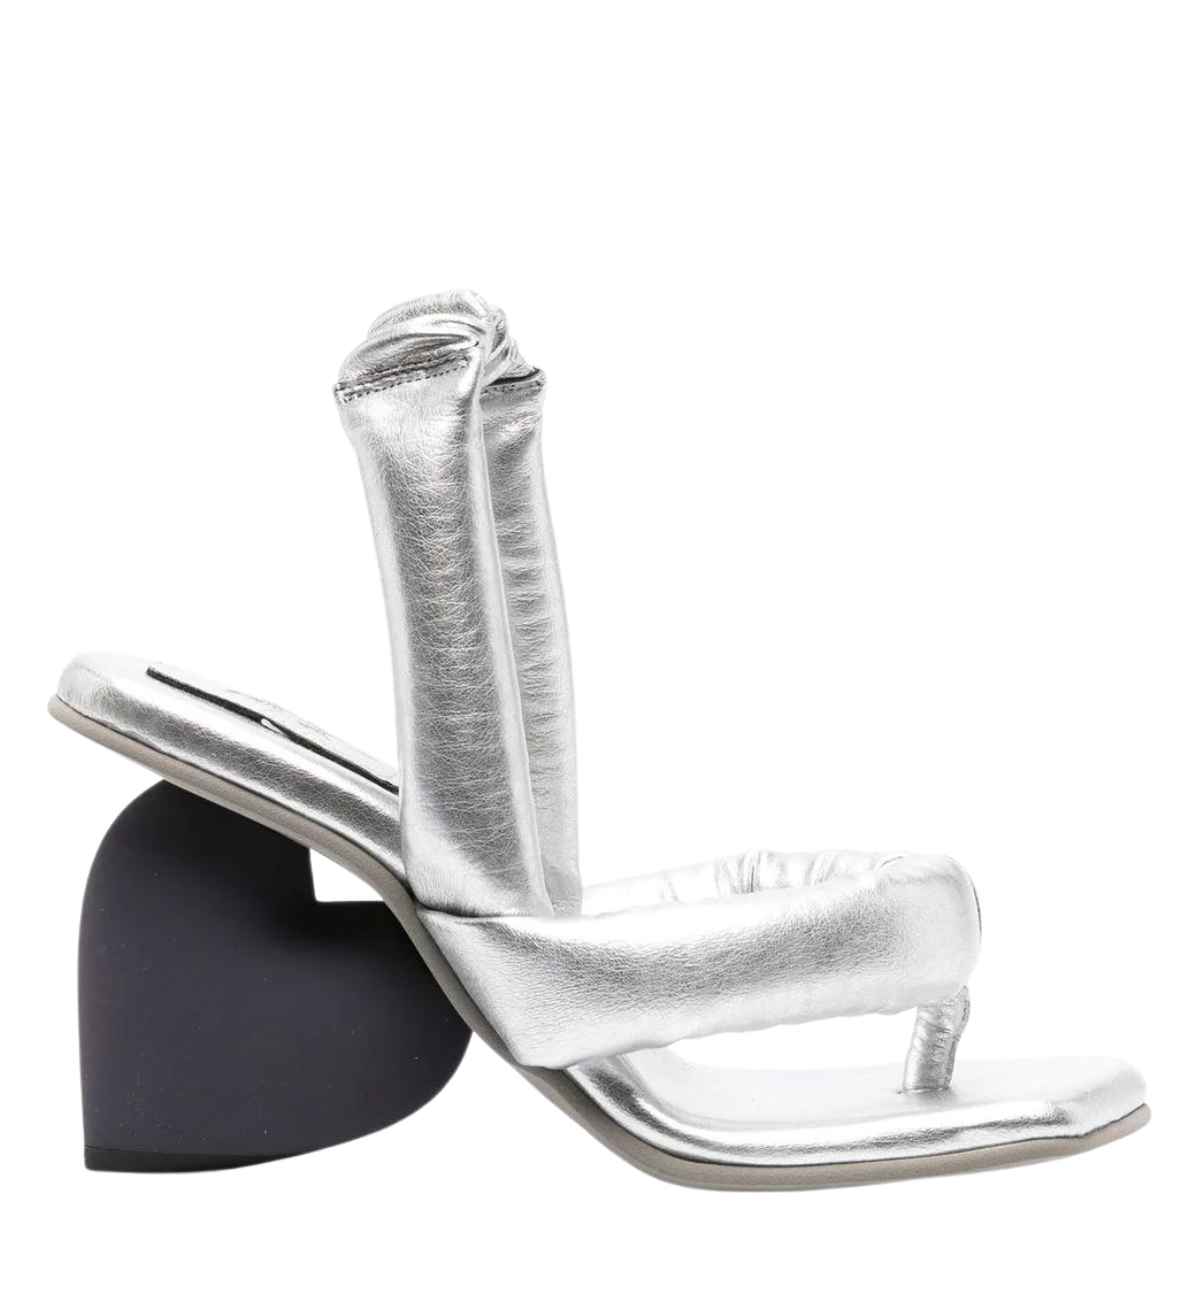 Metallic heart heel with black heart shaped heel on white background.